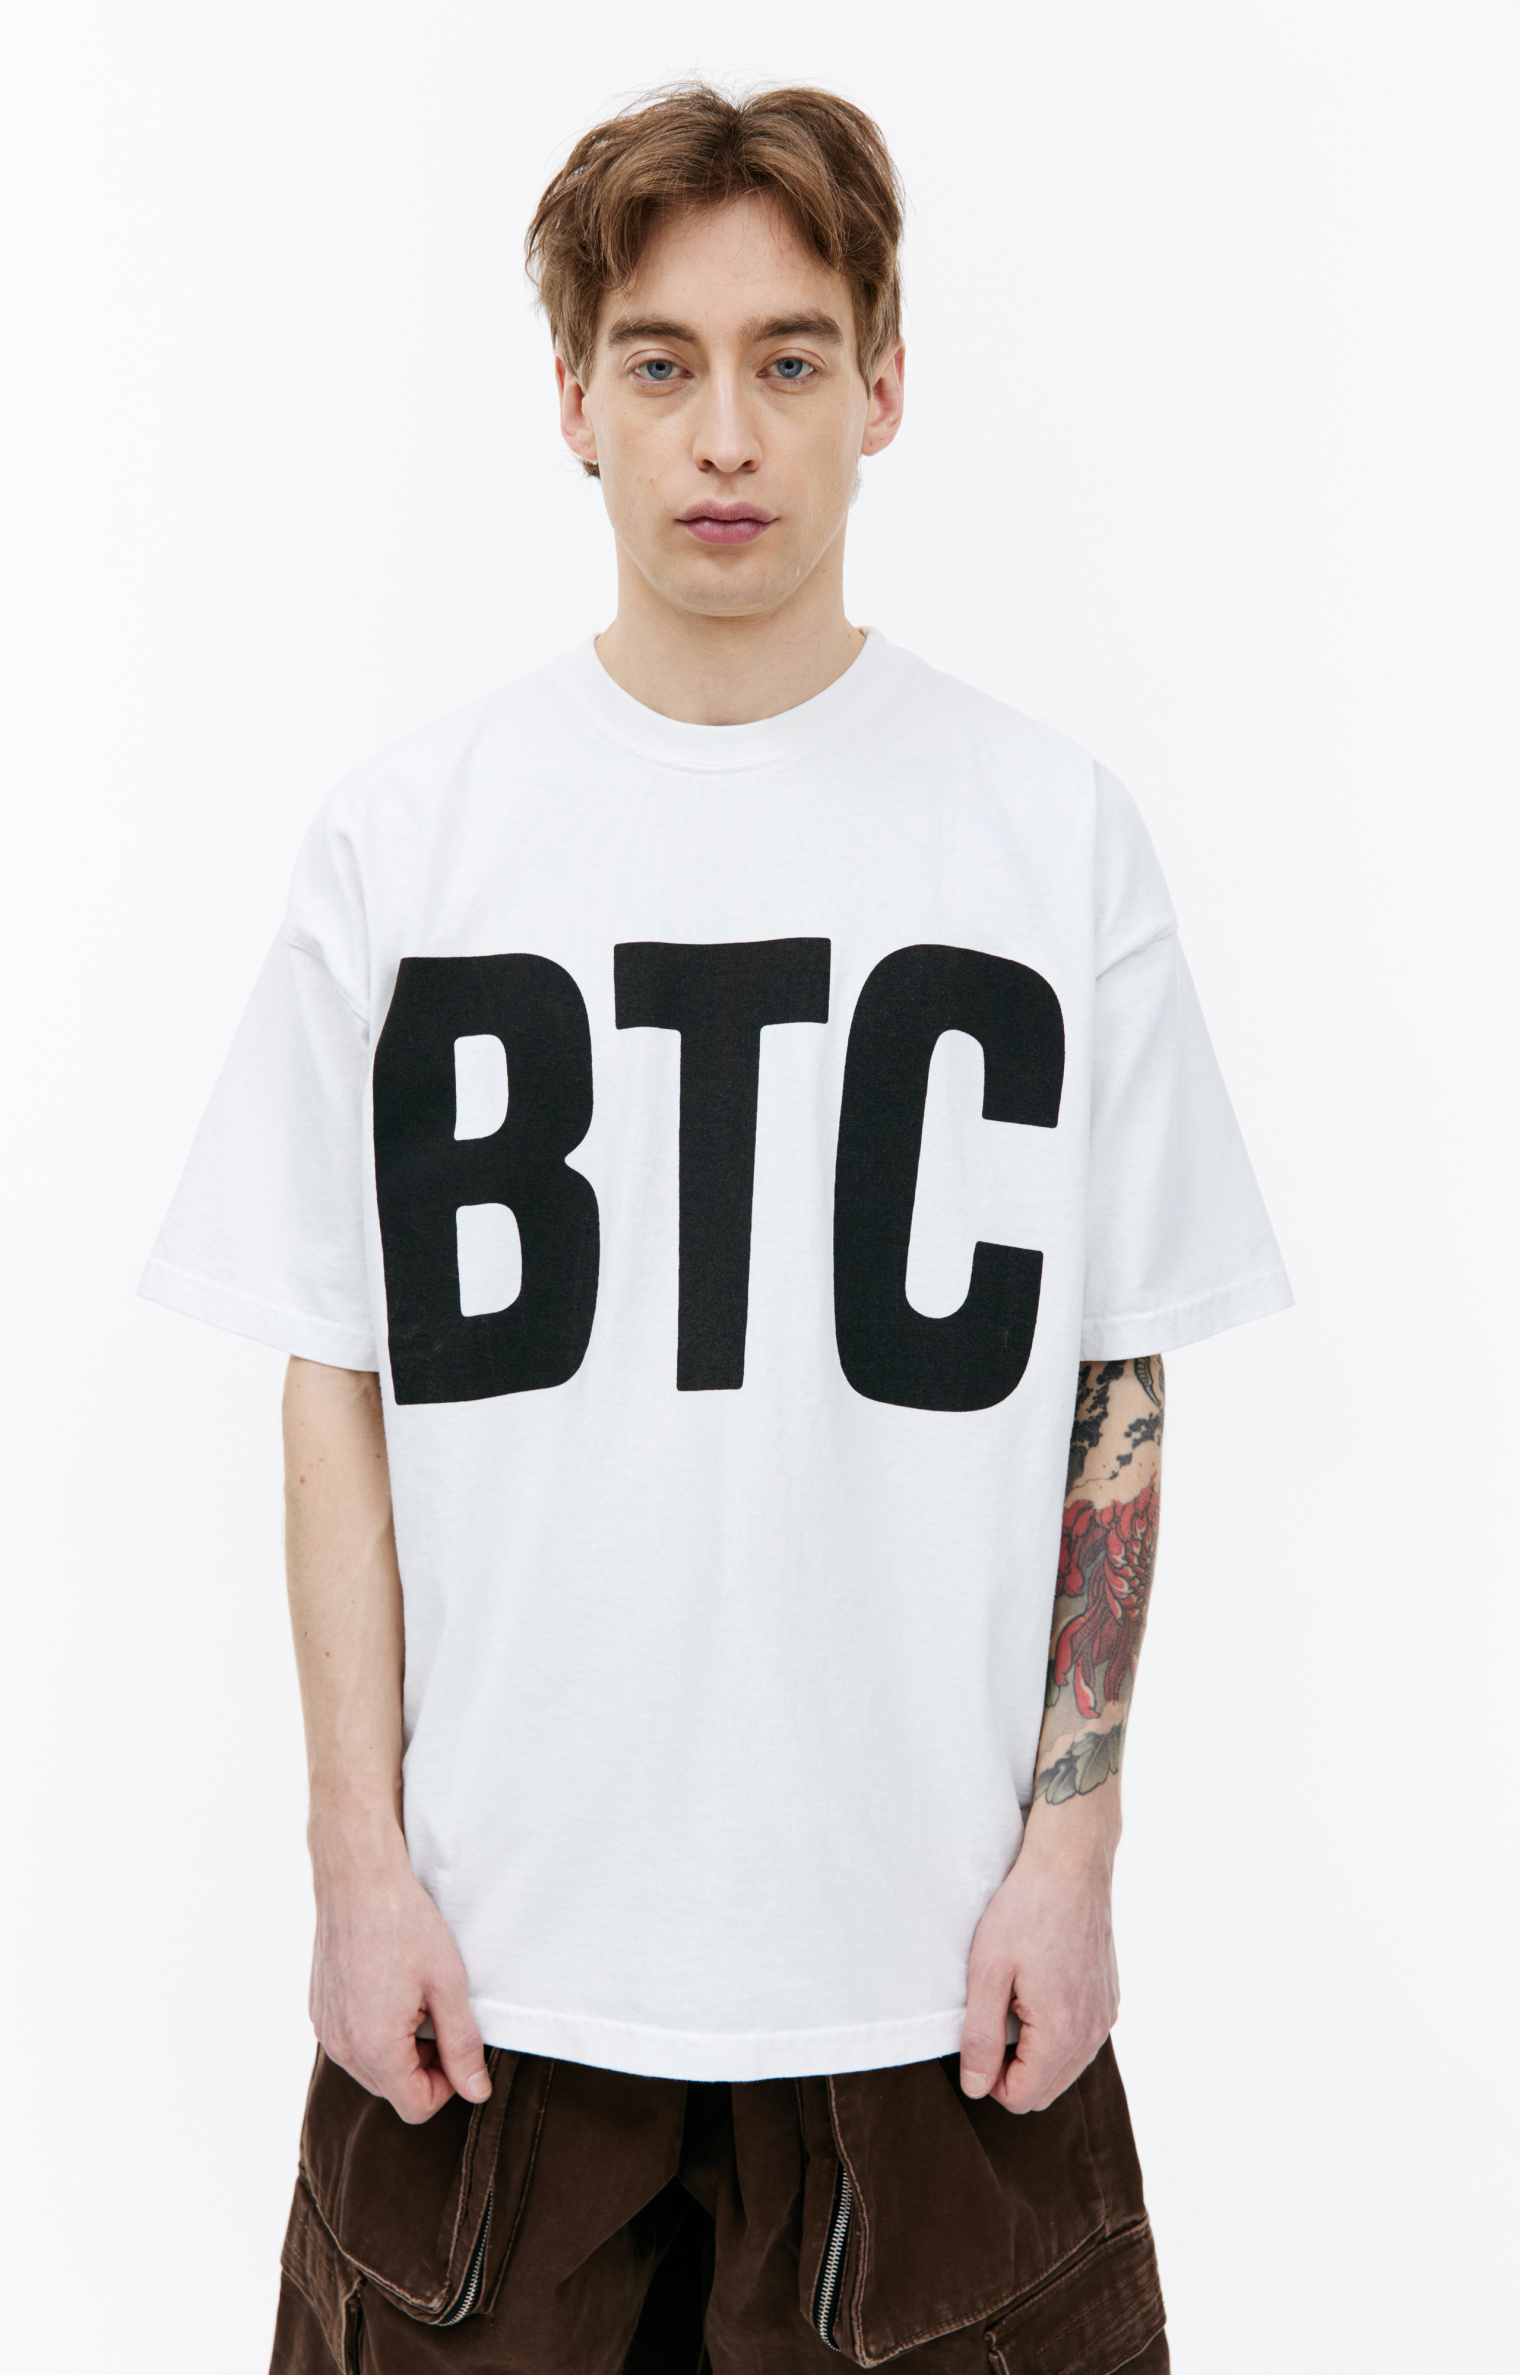 Satoshi Nakamoto BTC printed t-shirt